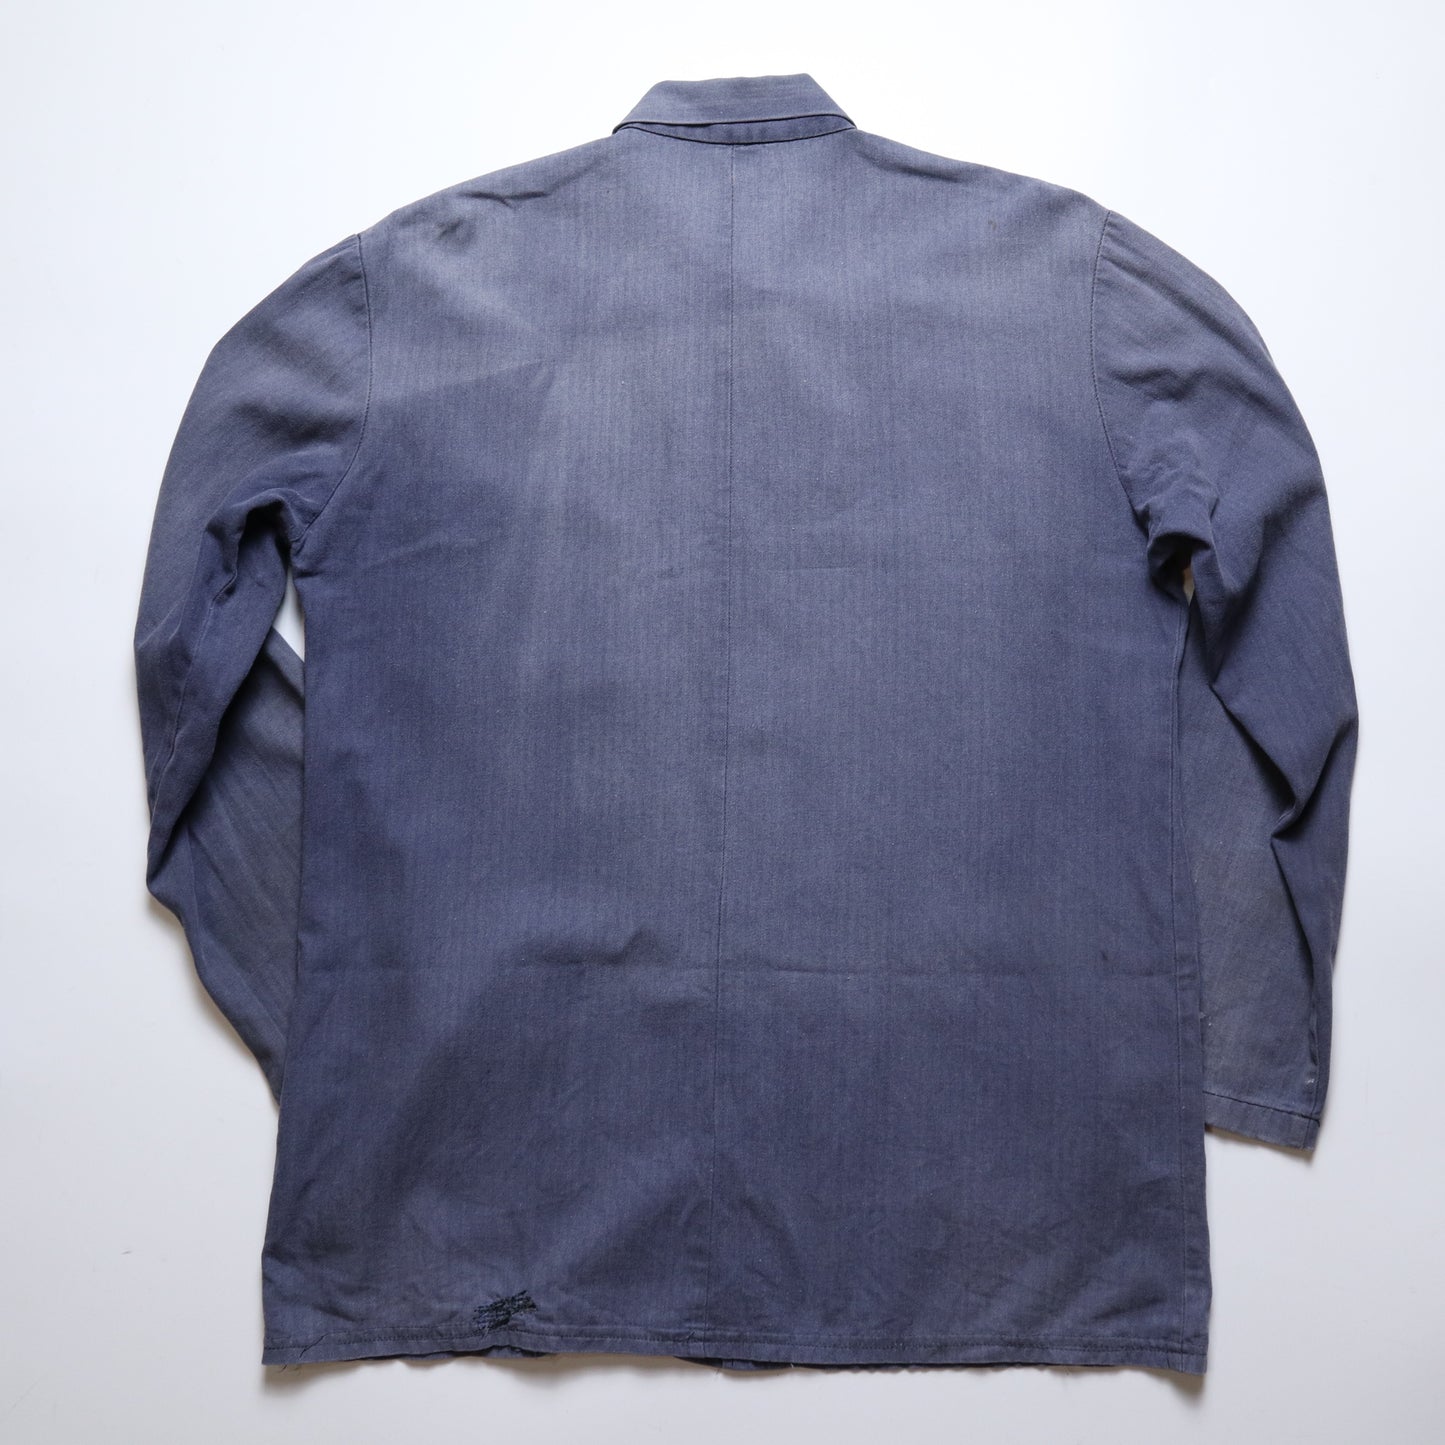 Herringbone French work jacket/HBT Work jacket